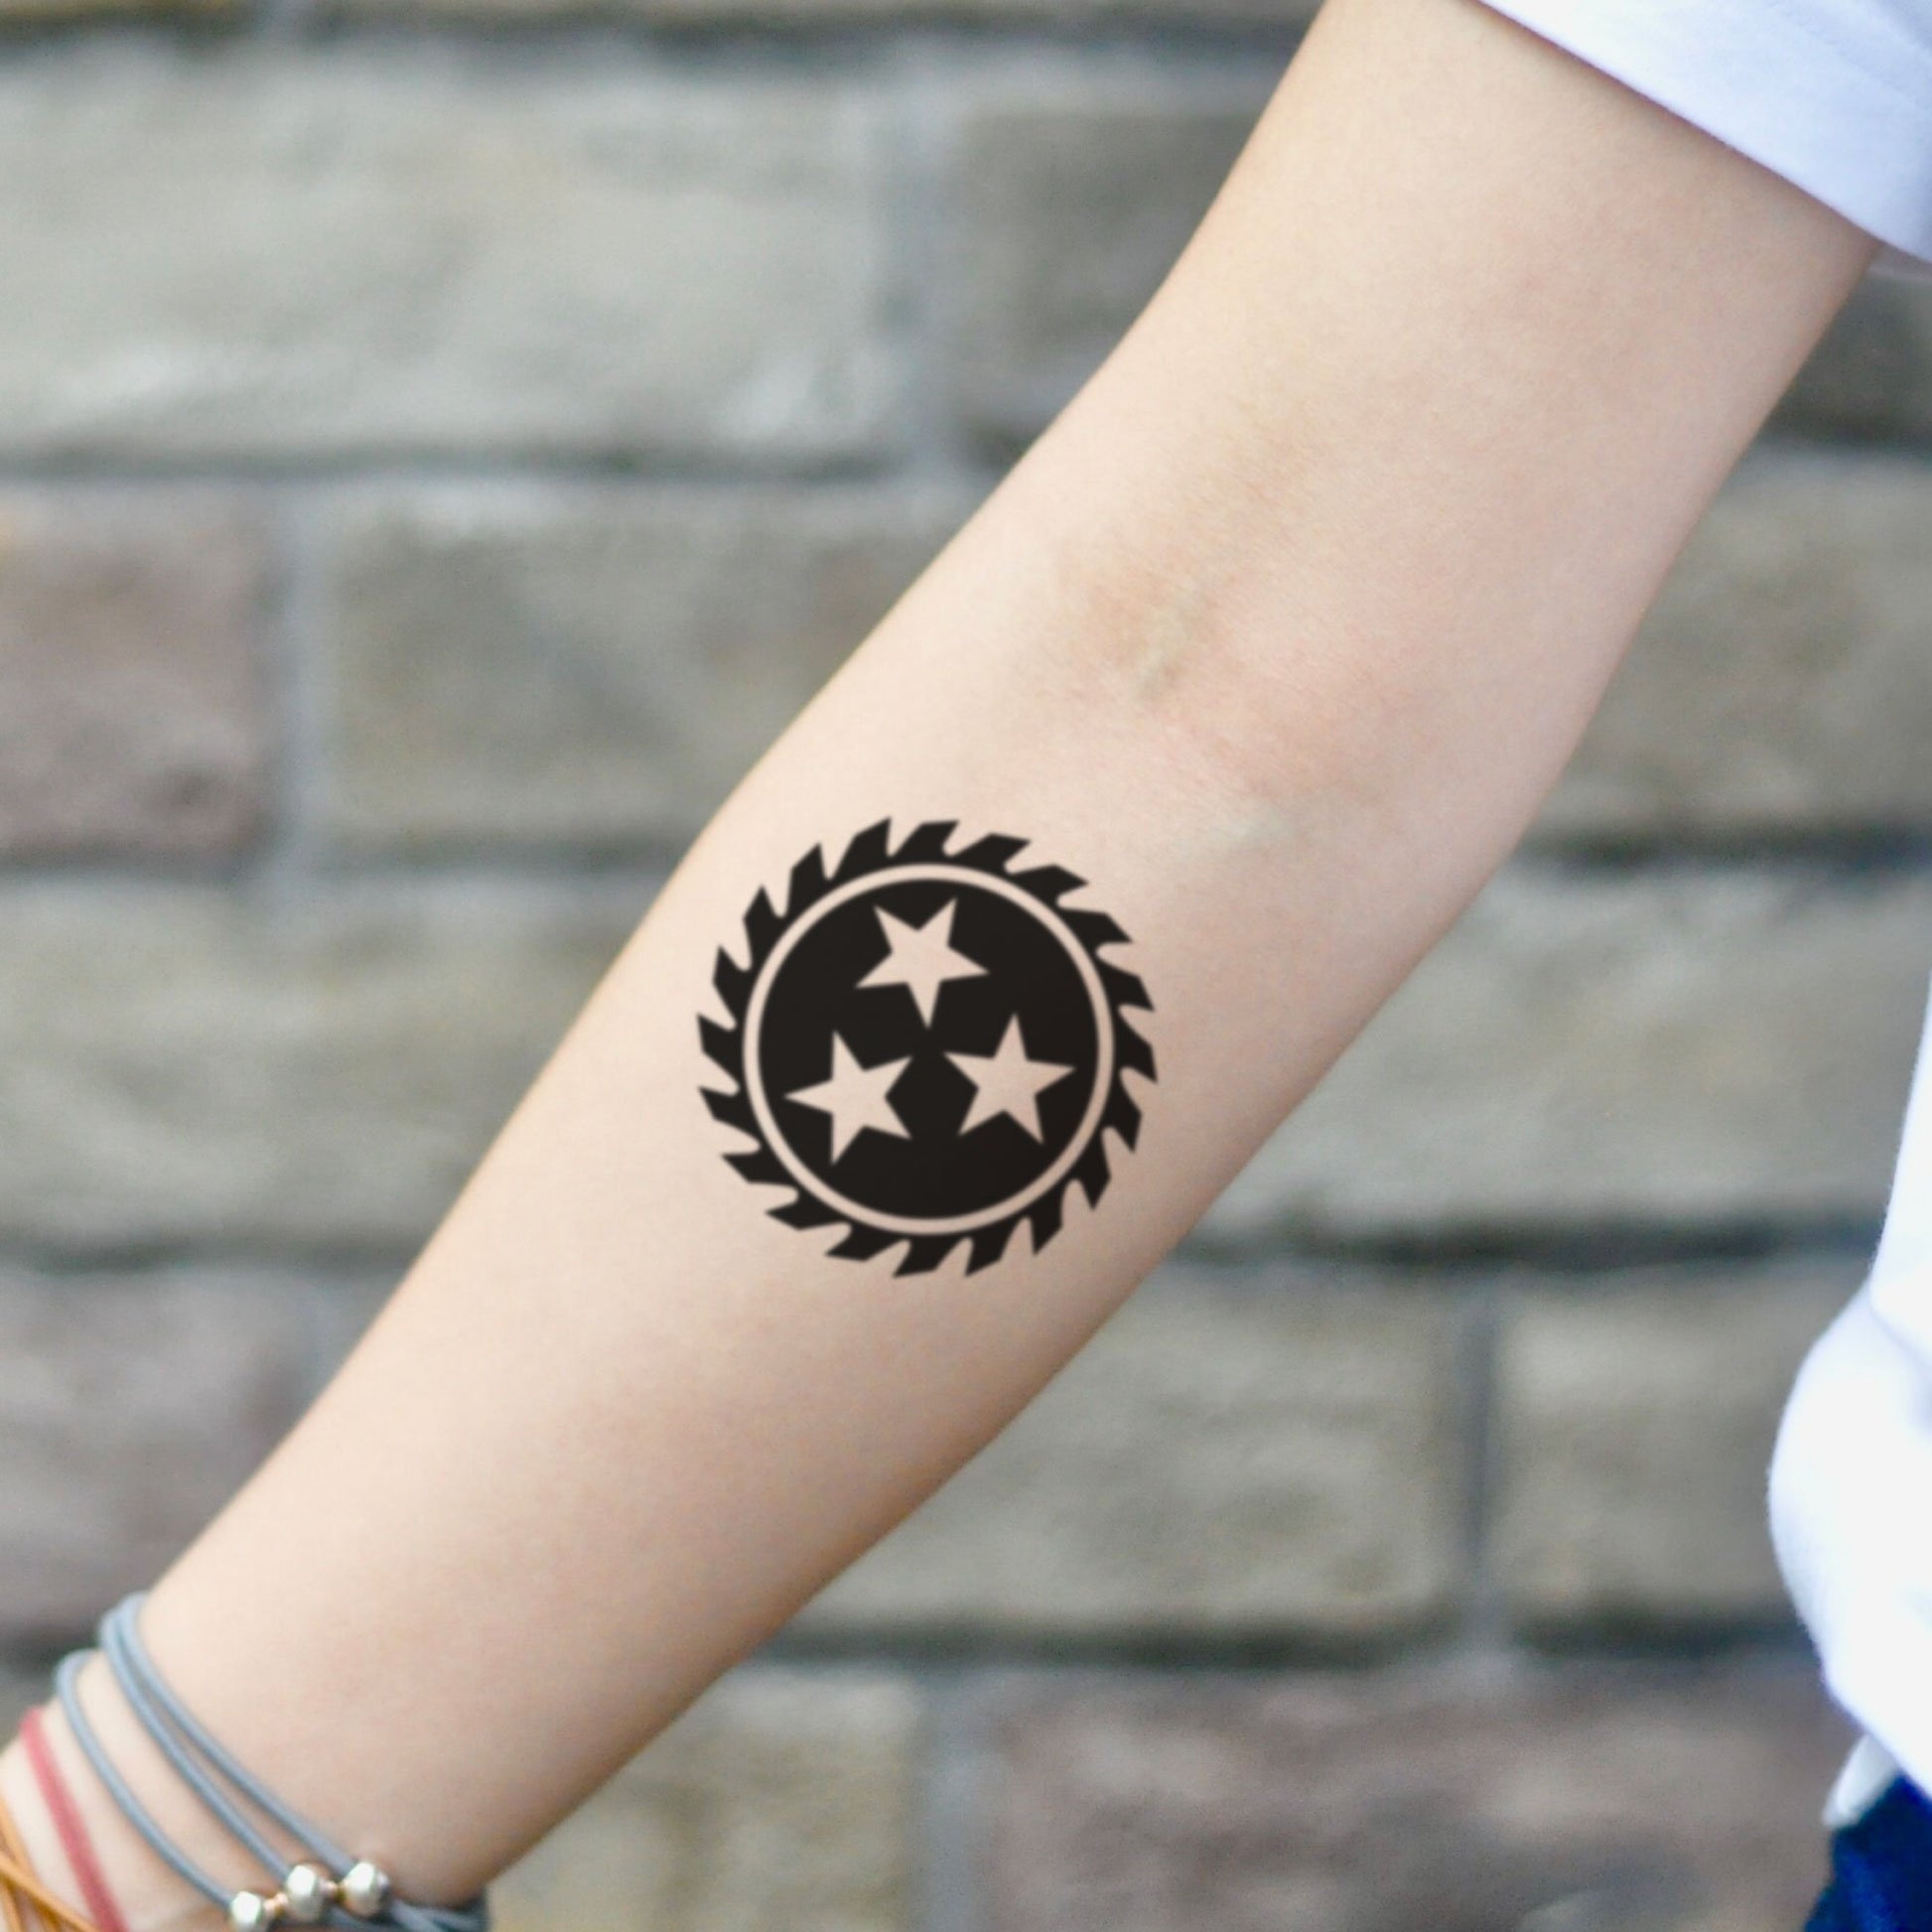 fake small saw blade 3 stars minimalist temporary tattoo sticker design idea on inner arm